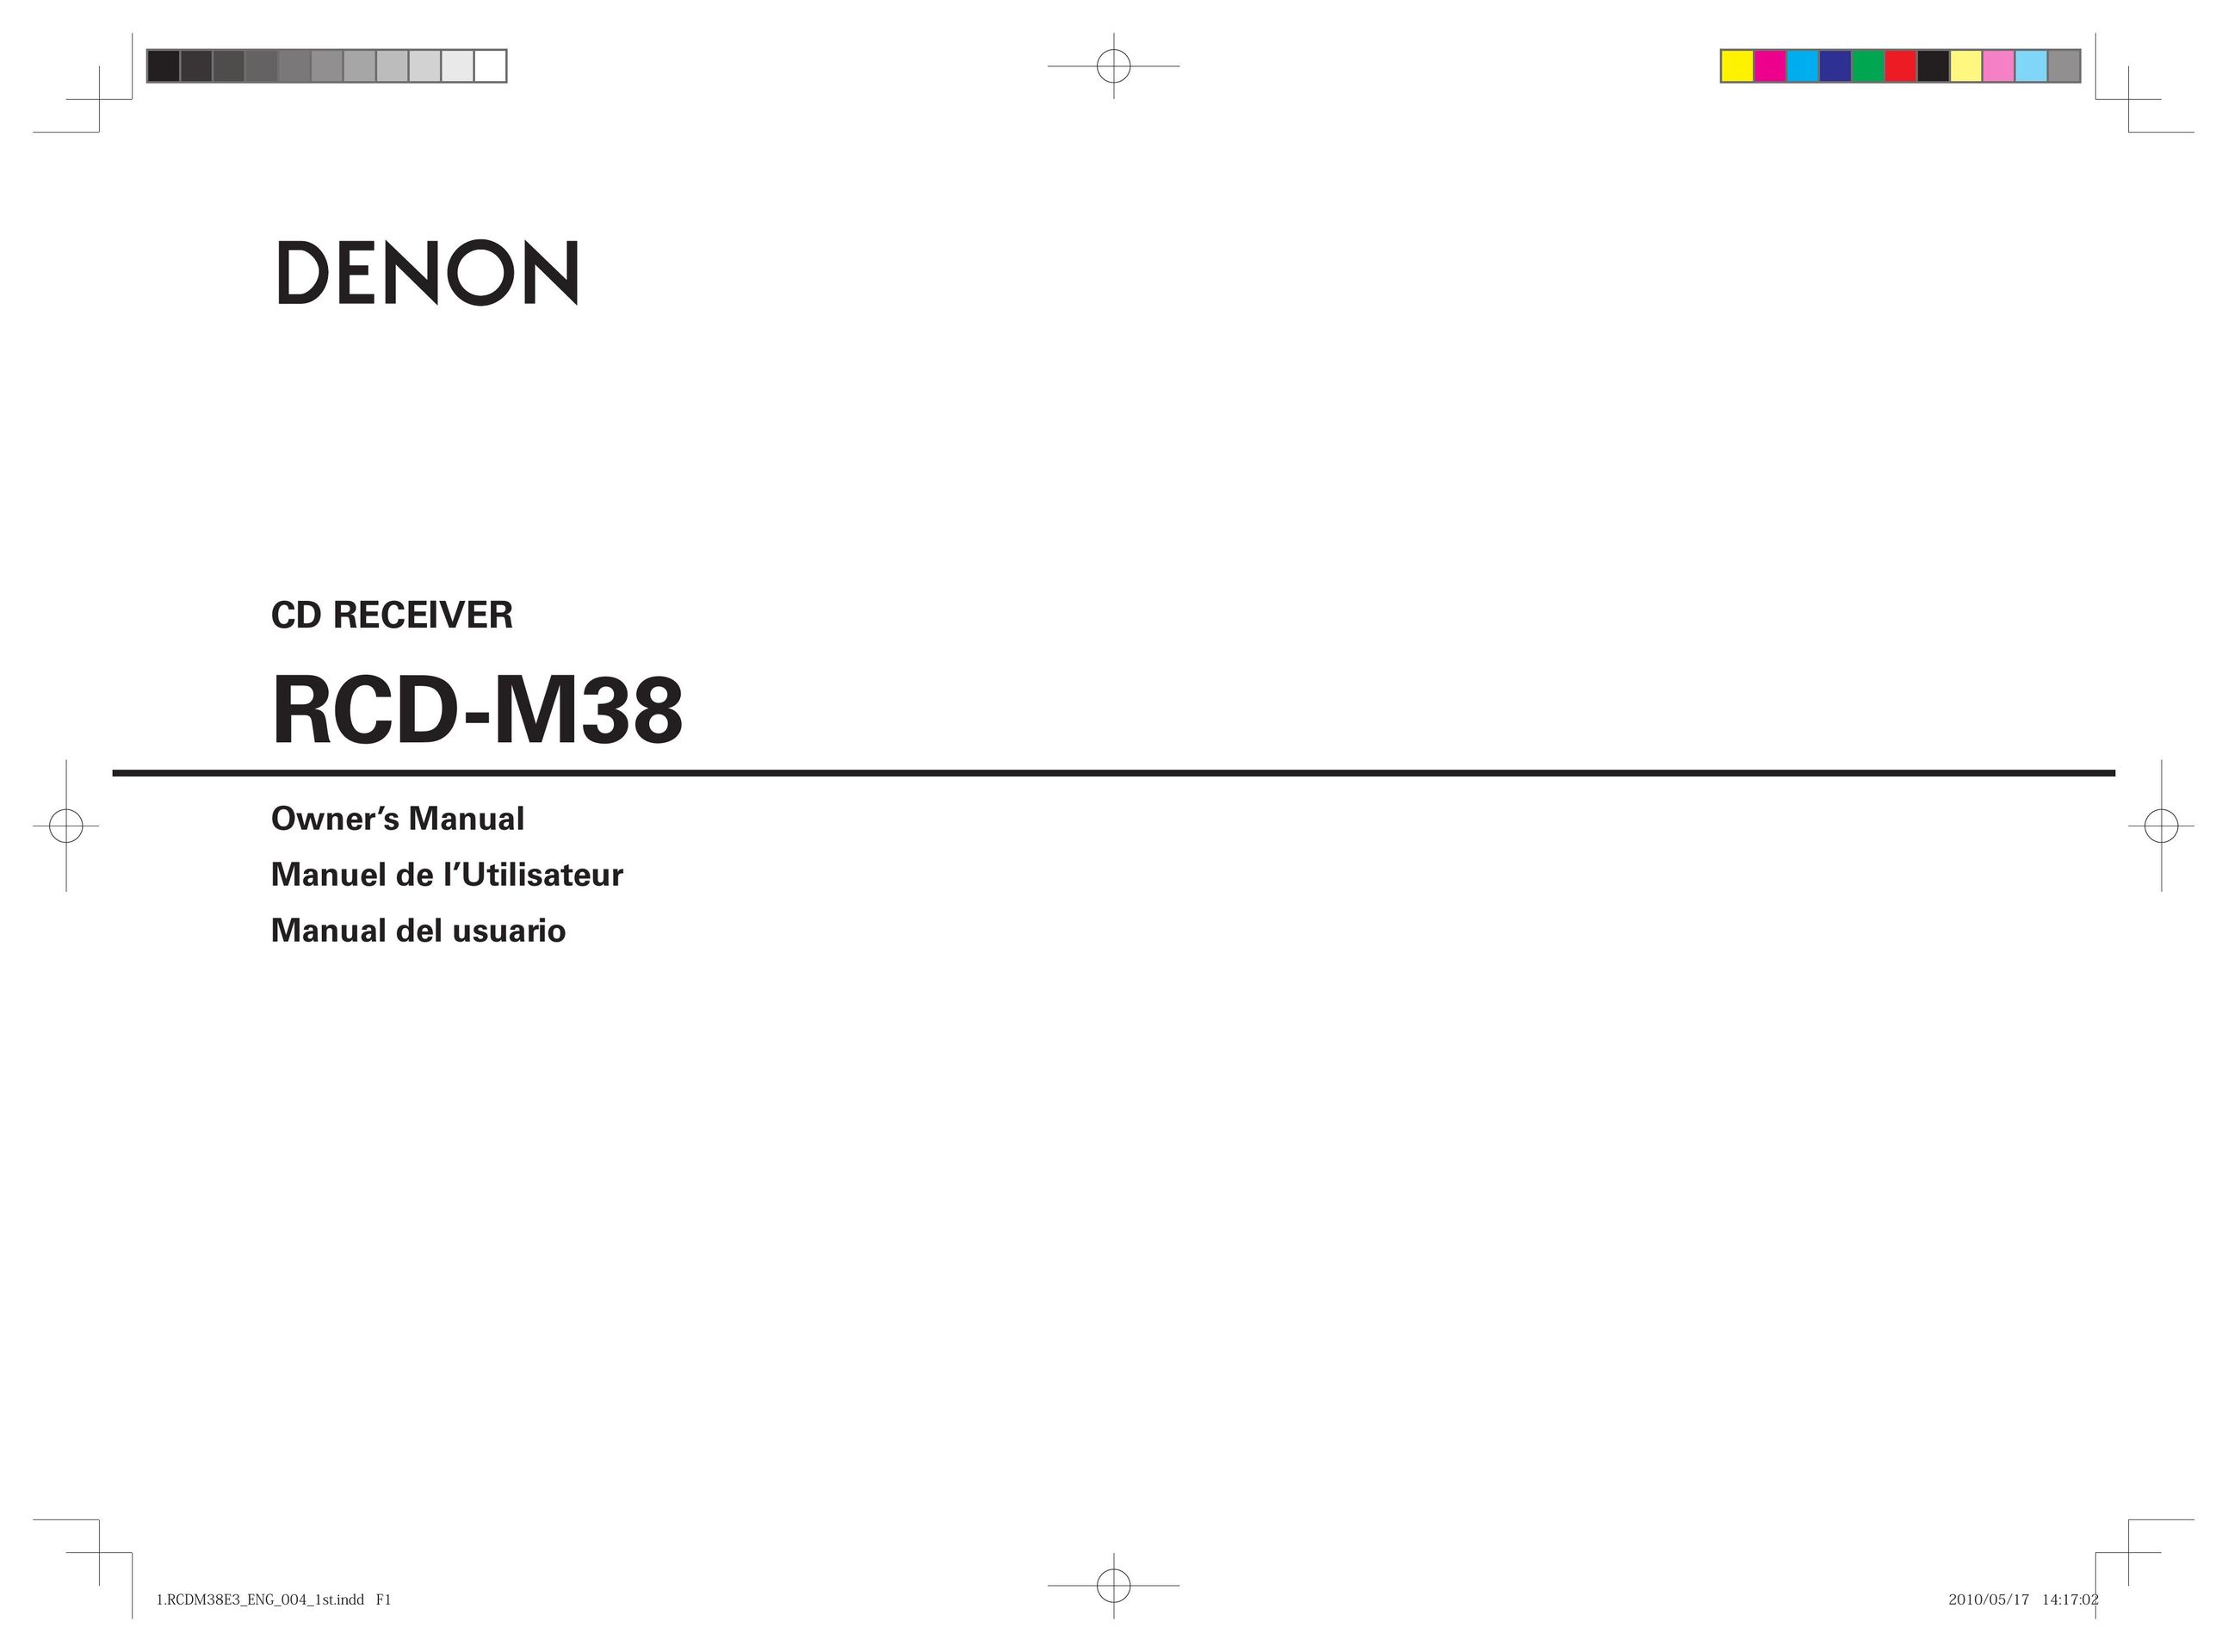 Denon RCD-M38 CD Player User Manual